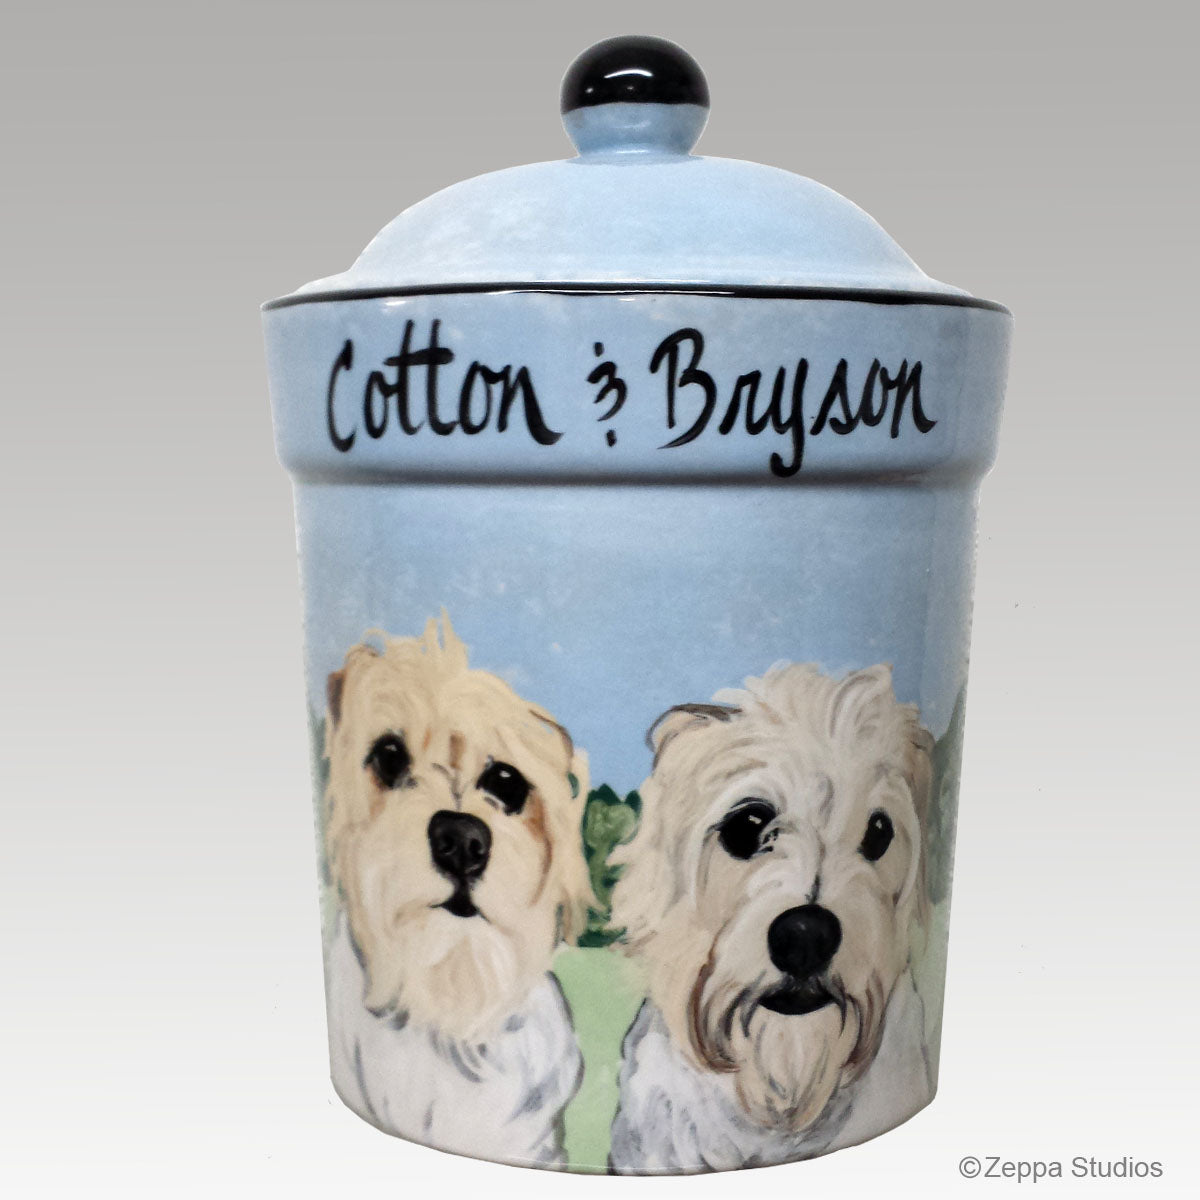 Custom Hand Painted Ceramic Treat Jar, Cotton & Bryson by Zeppa Studios